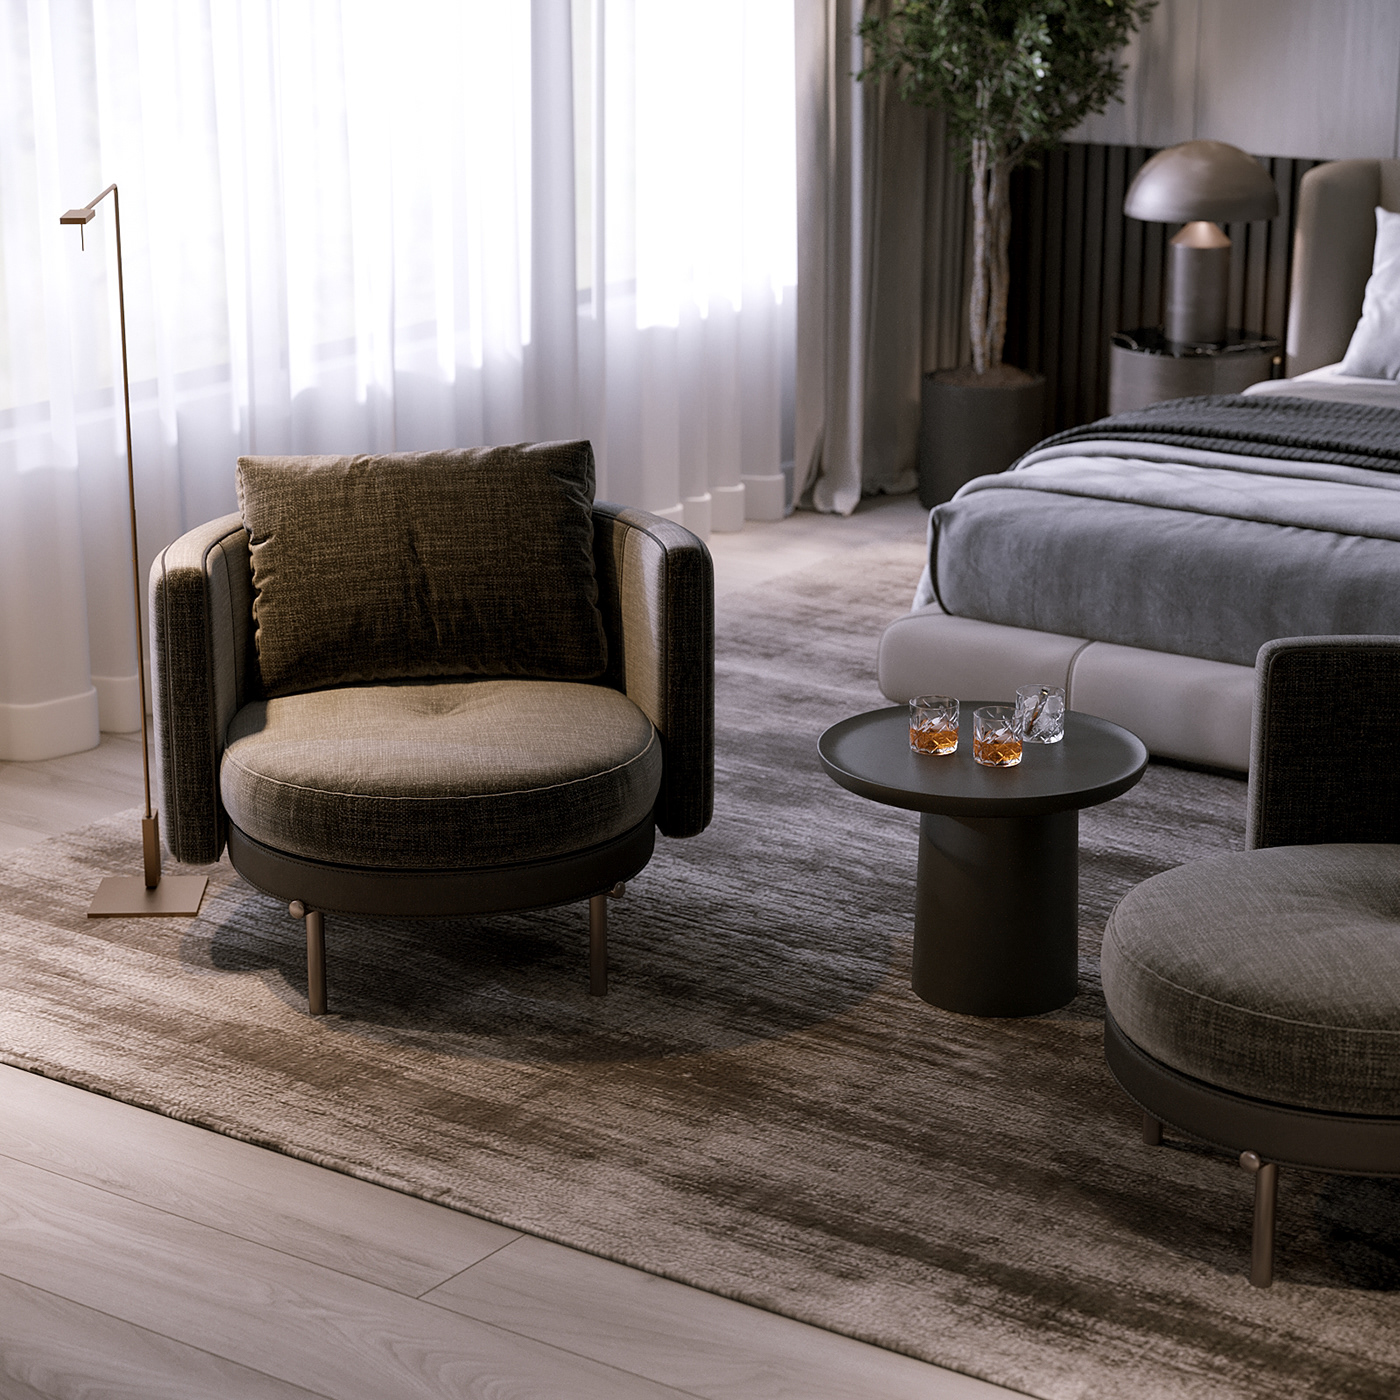 3D 3ds max architecture bedroom corona Interior interior design  modern Render visualization